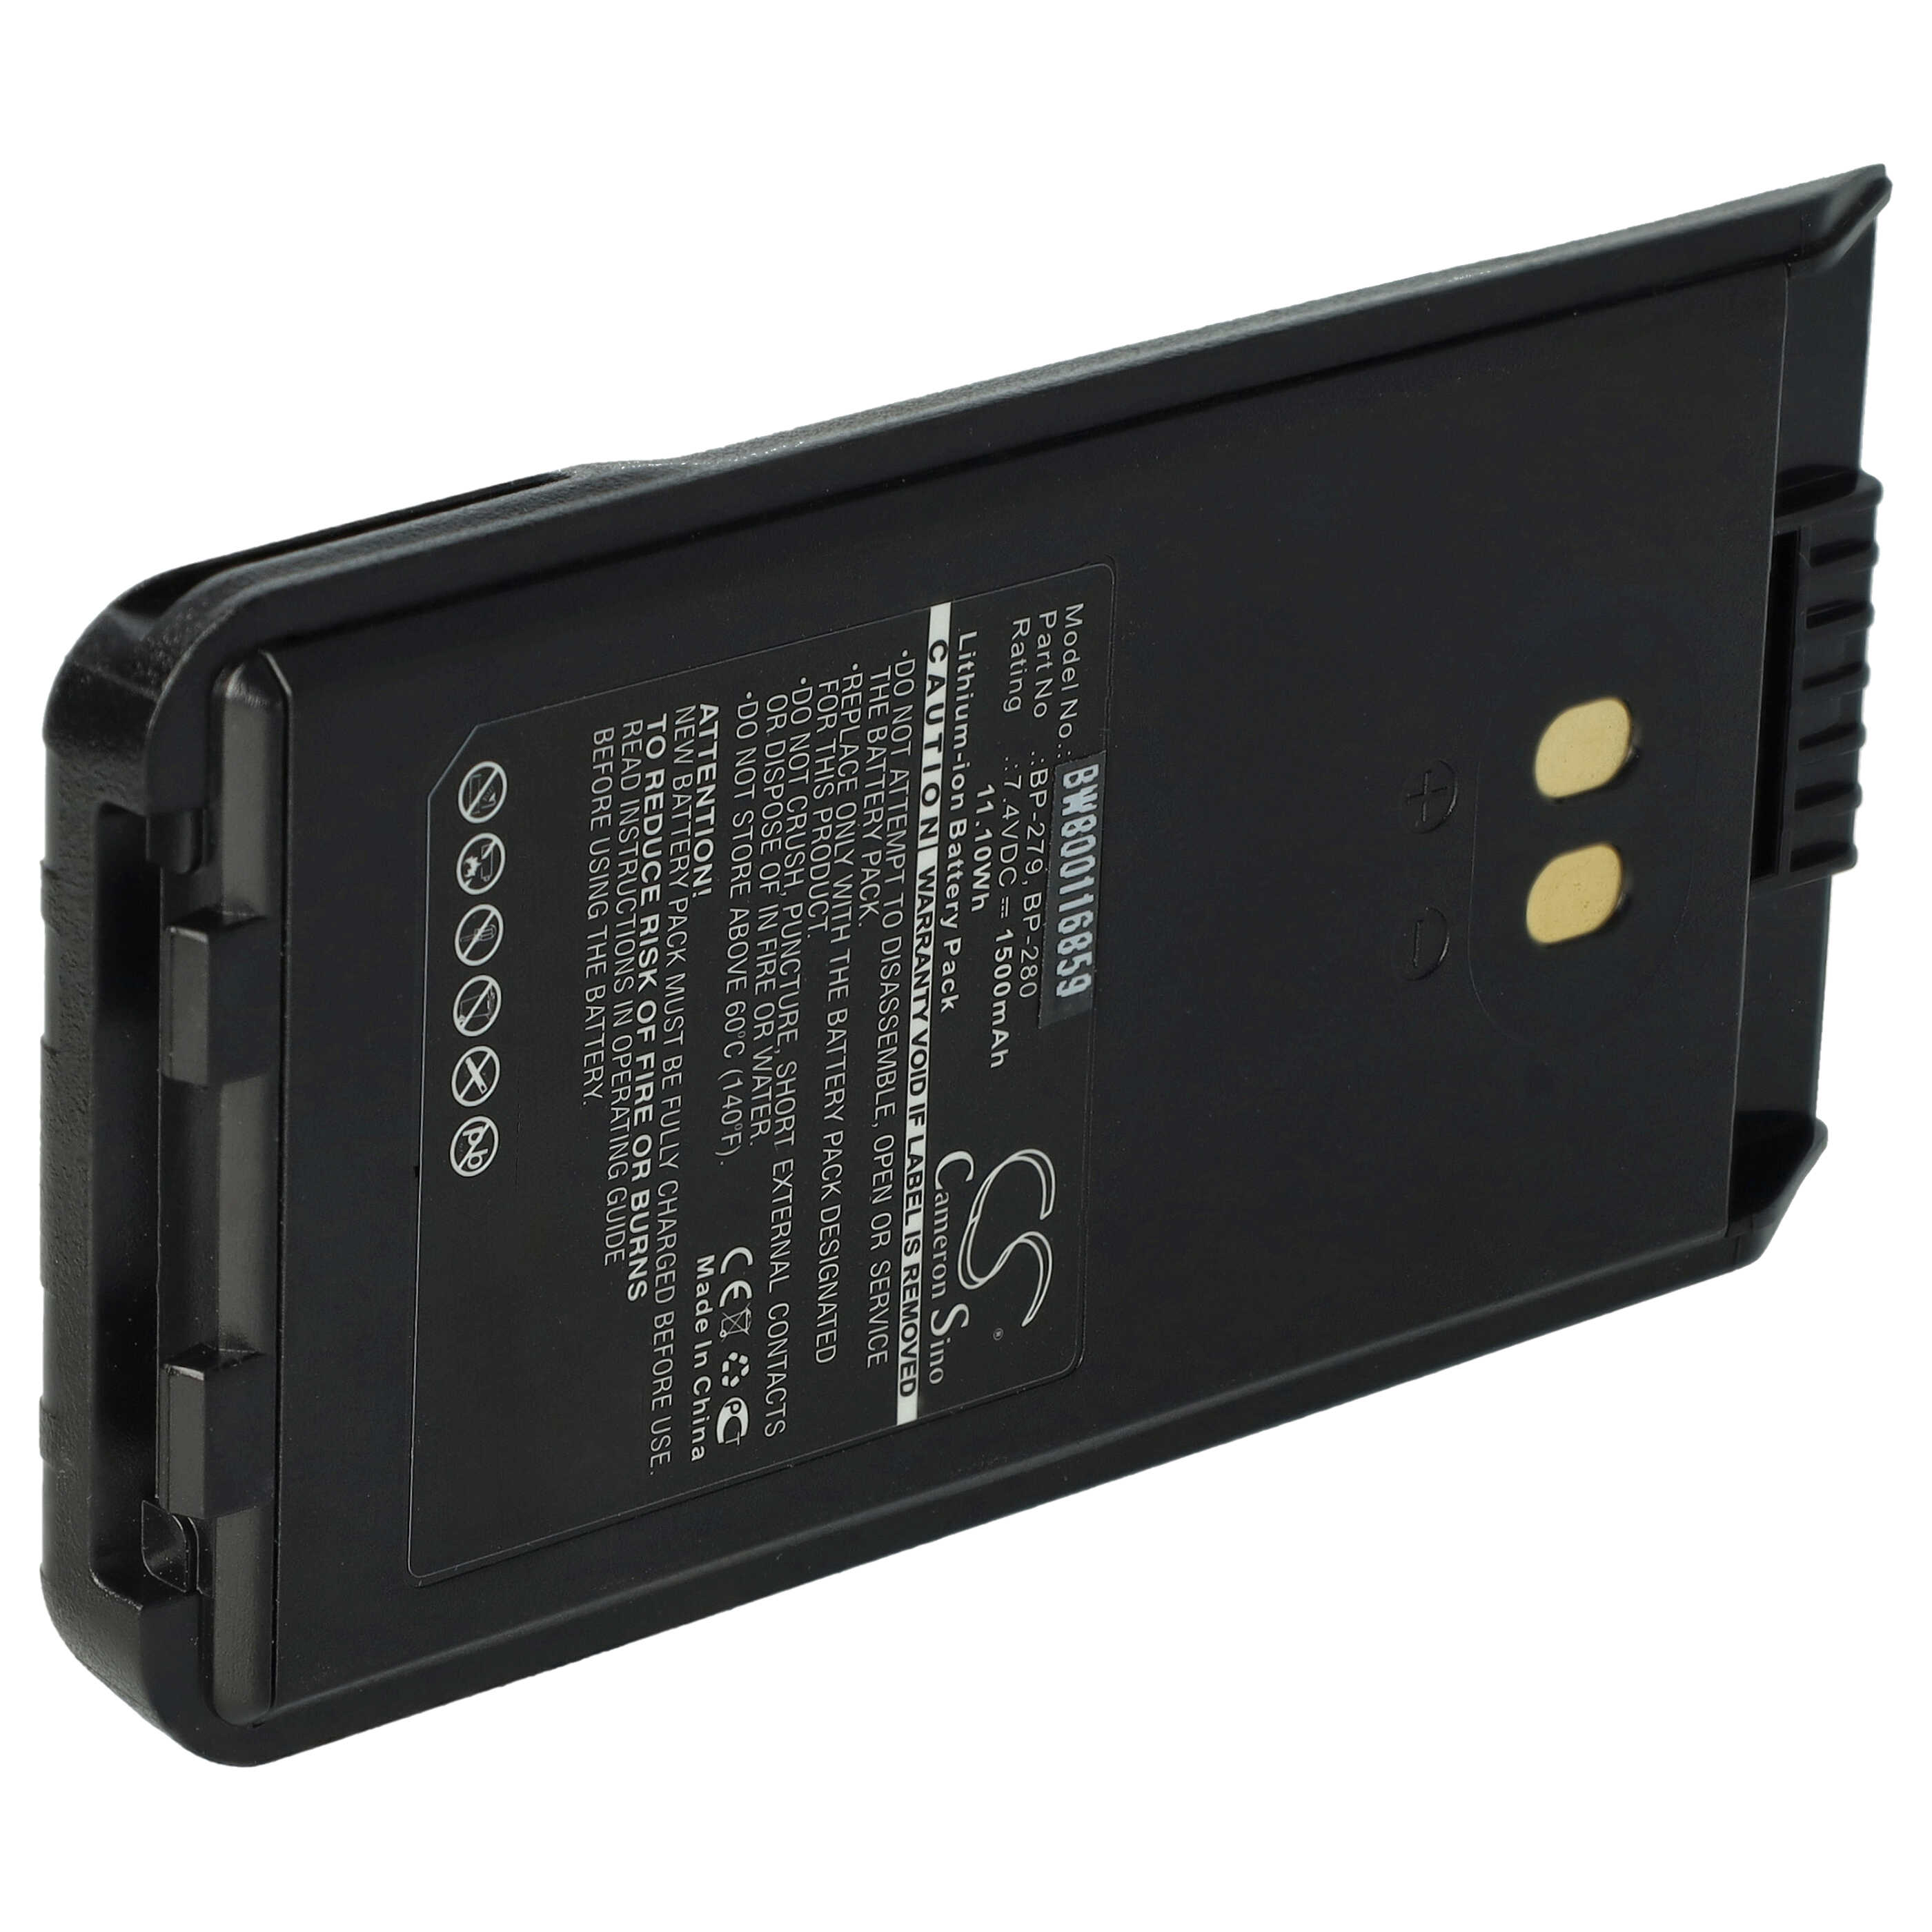 Batteria per dispositivo radio sostituisce Icom BP-279, BP-280, BP-280LI Icom - 1500mAh 7,4V Li-Ion